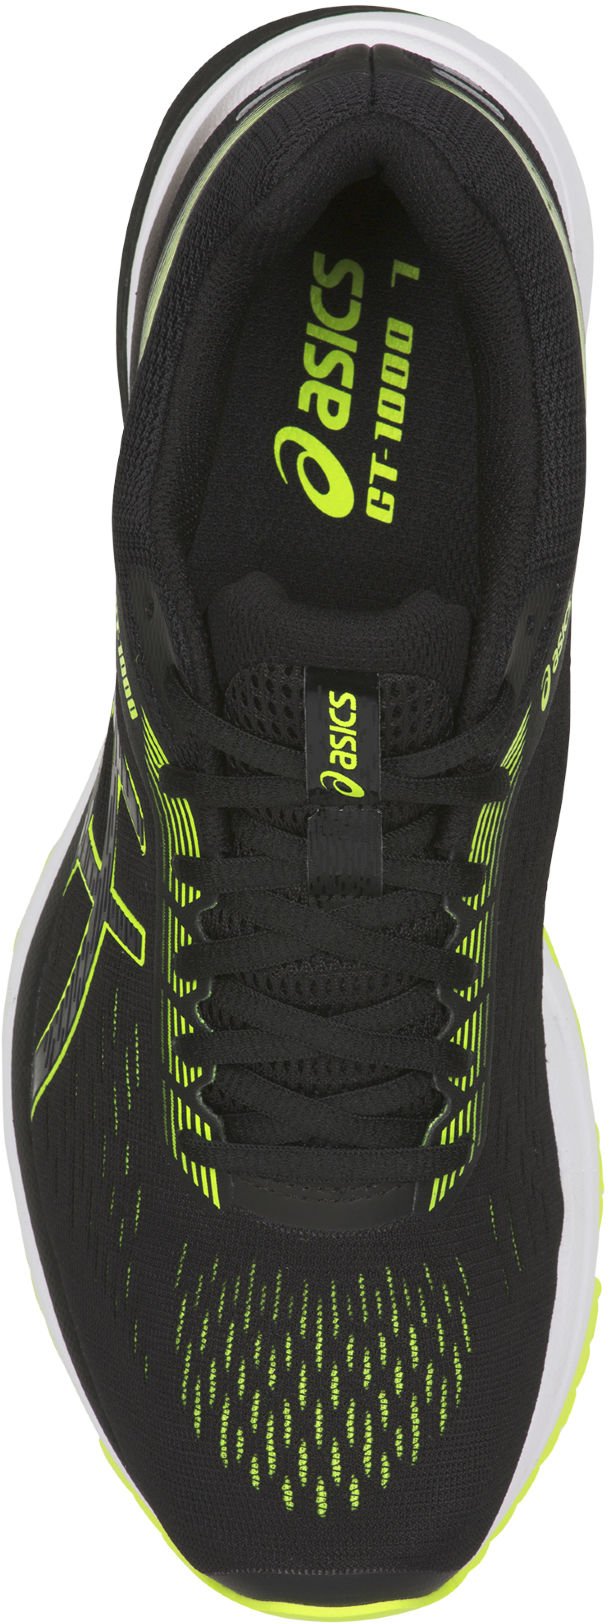 Running shoes ASICS GT-1000 7